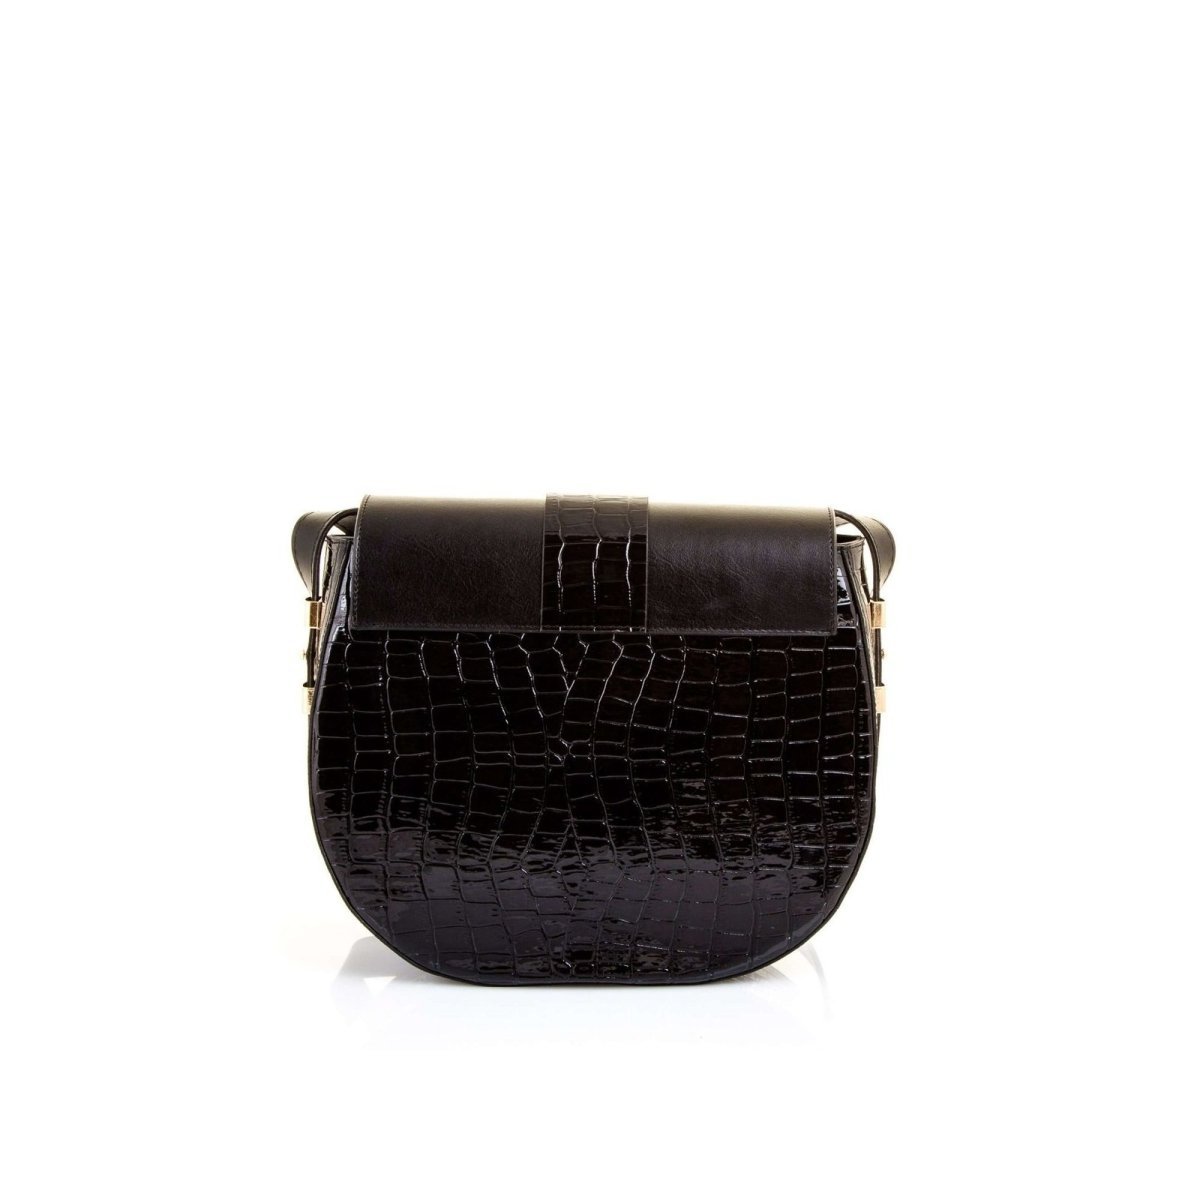 D Shape Shoulder Bag with Croc Effect Design - Ozzell London